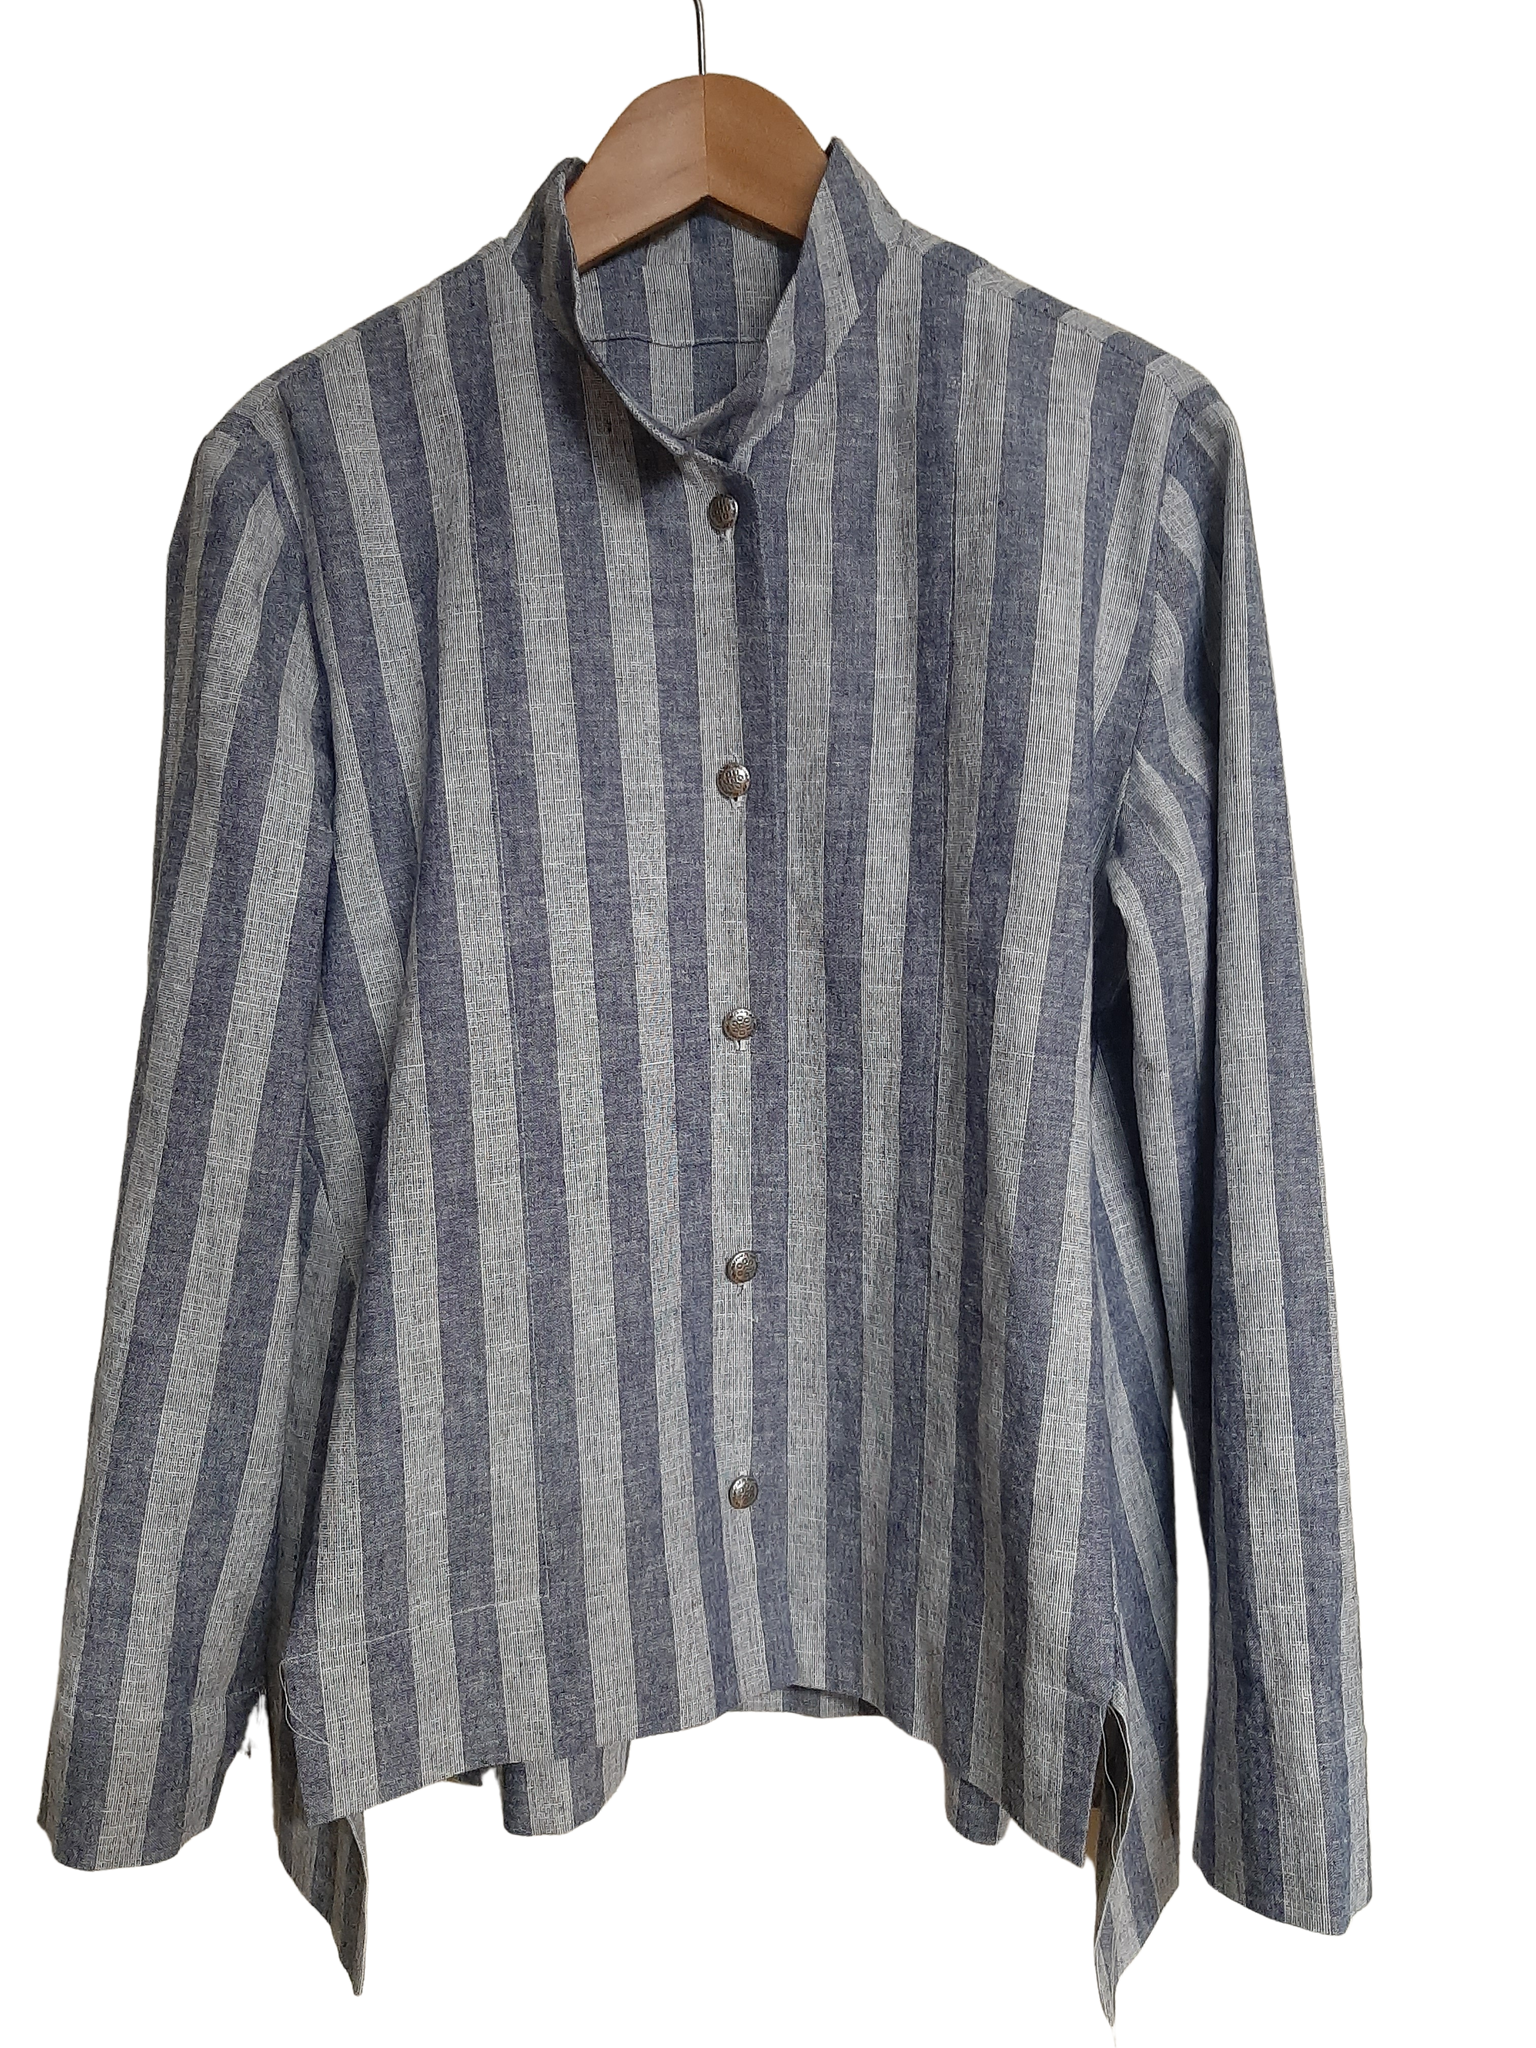 Striped Swing Shirt Size Medium